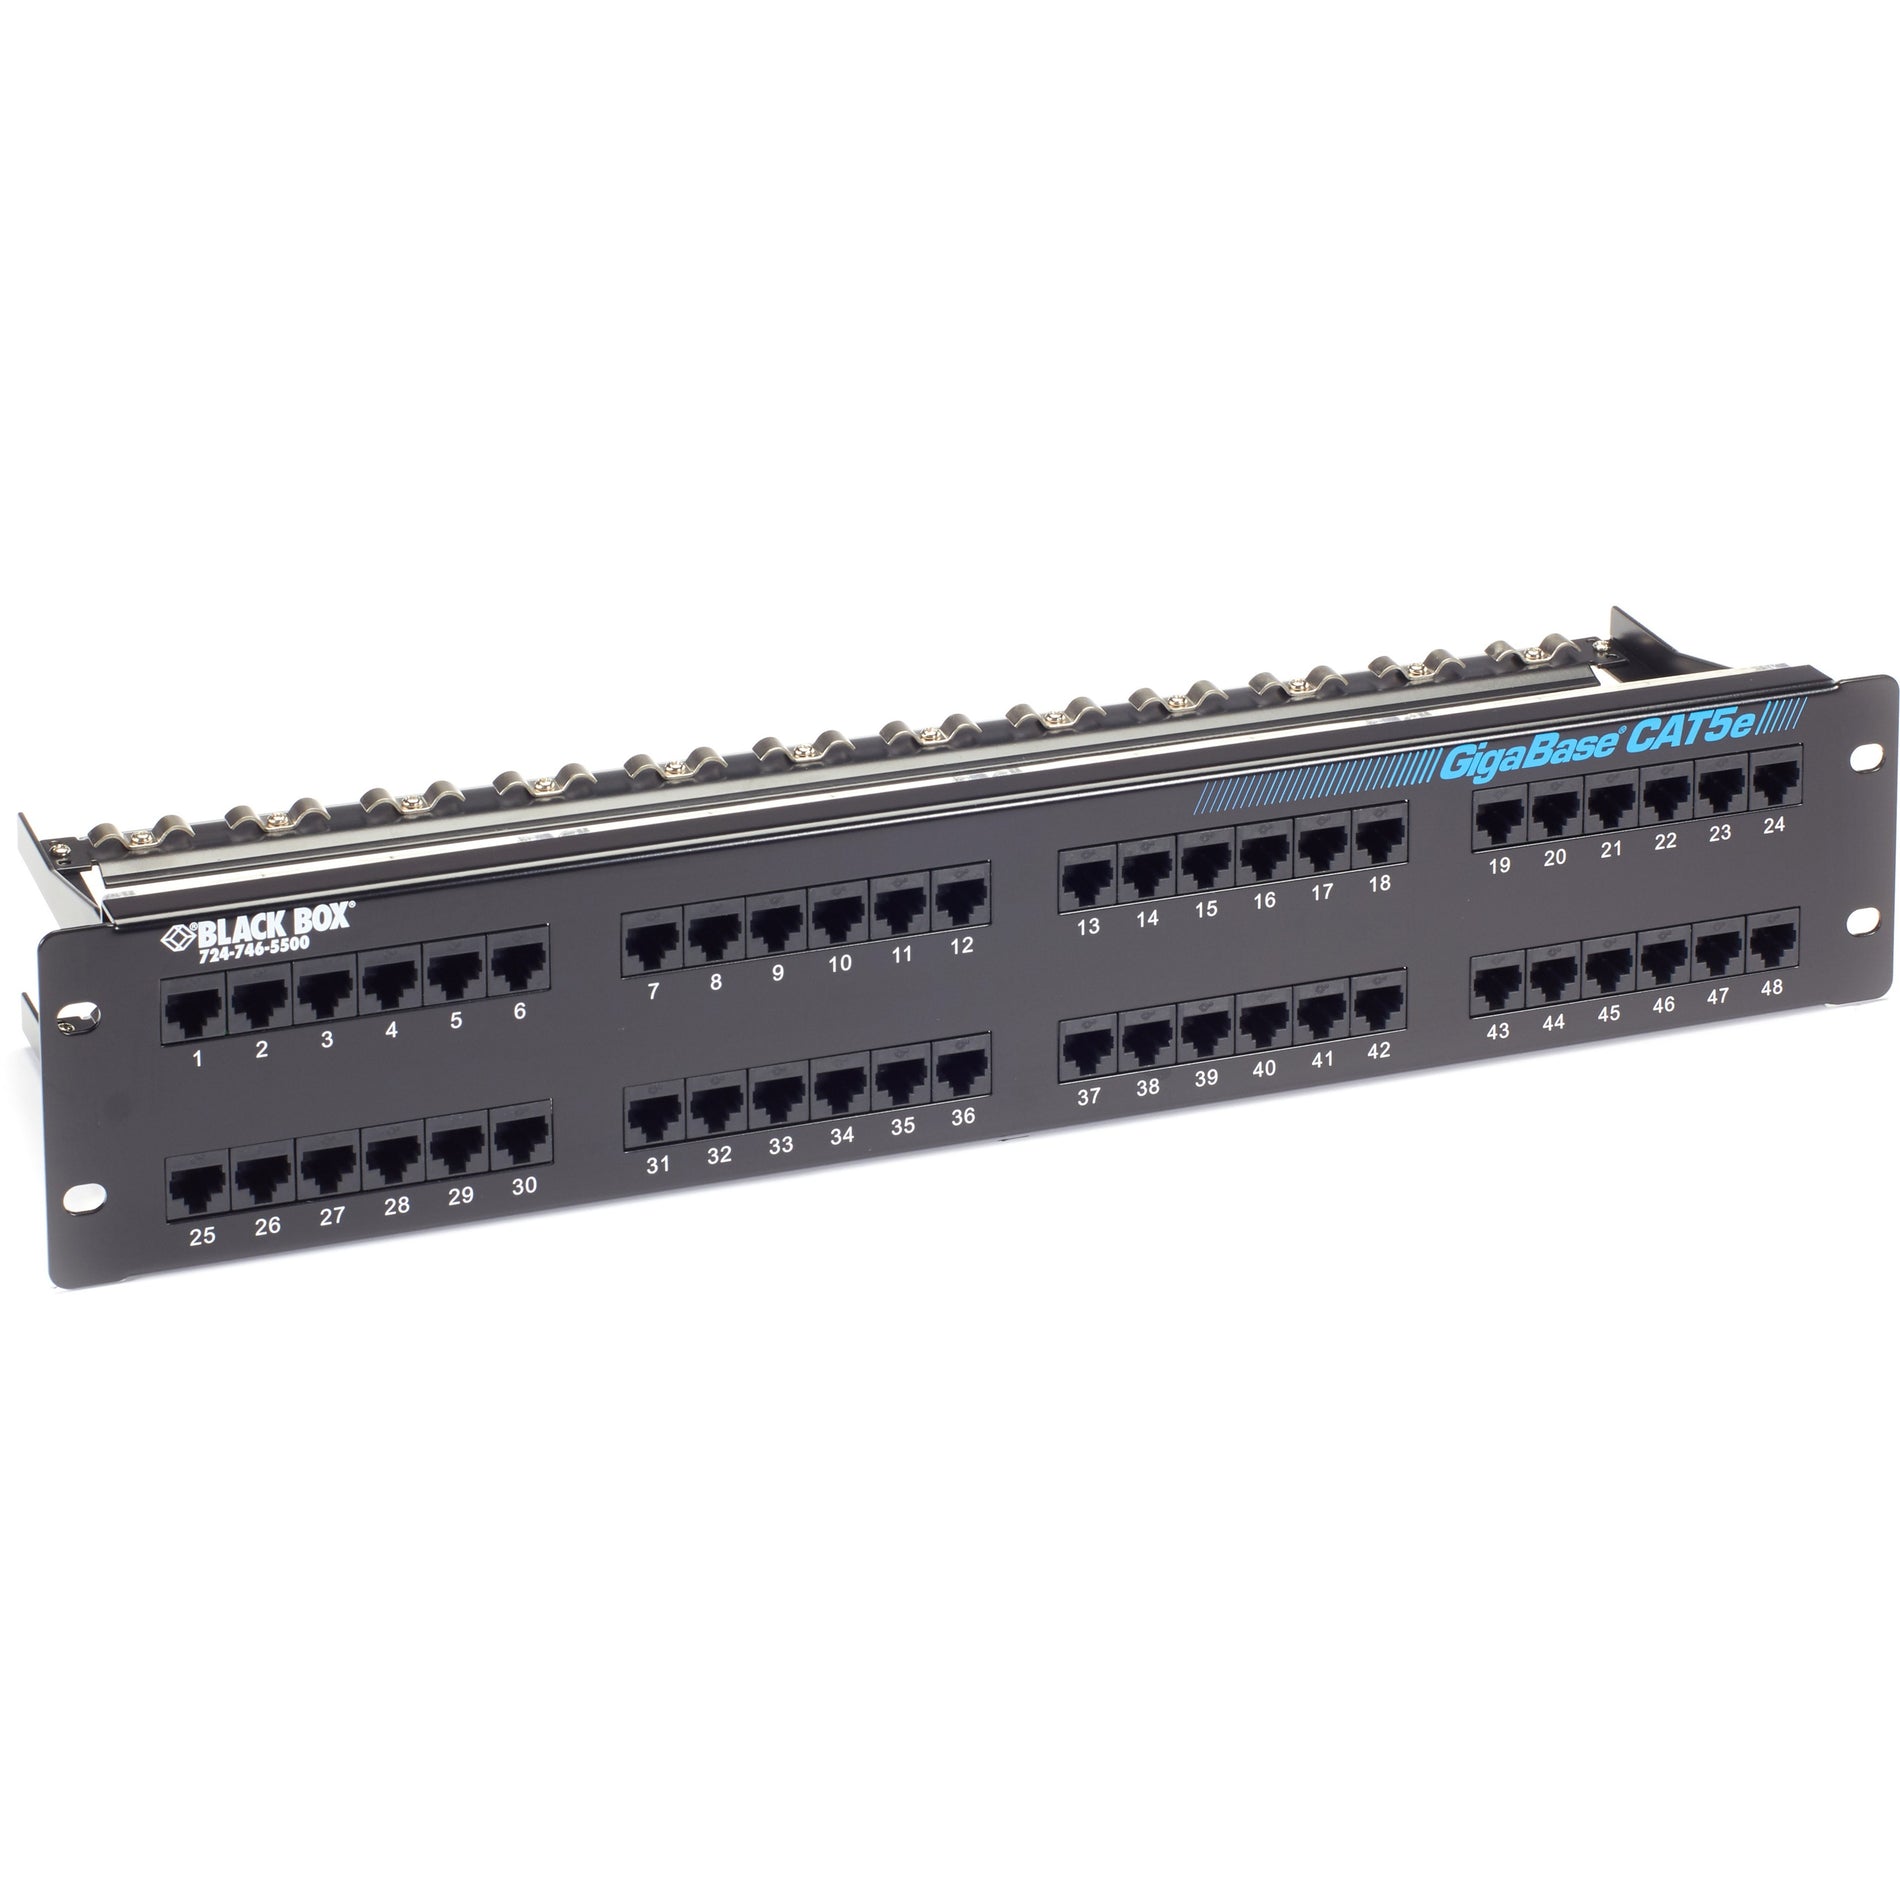 Black Box JPM906A-R6 GigaBase CAT5e Patch Panel - 2U, Unshielded, 48-Port